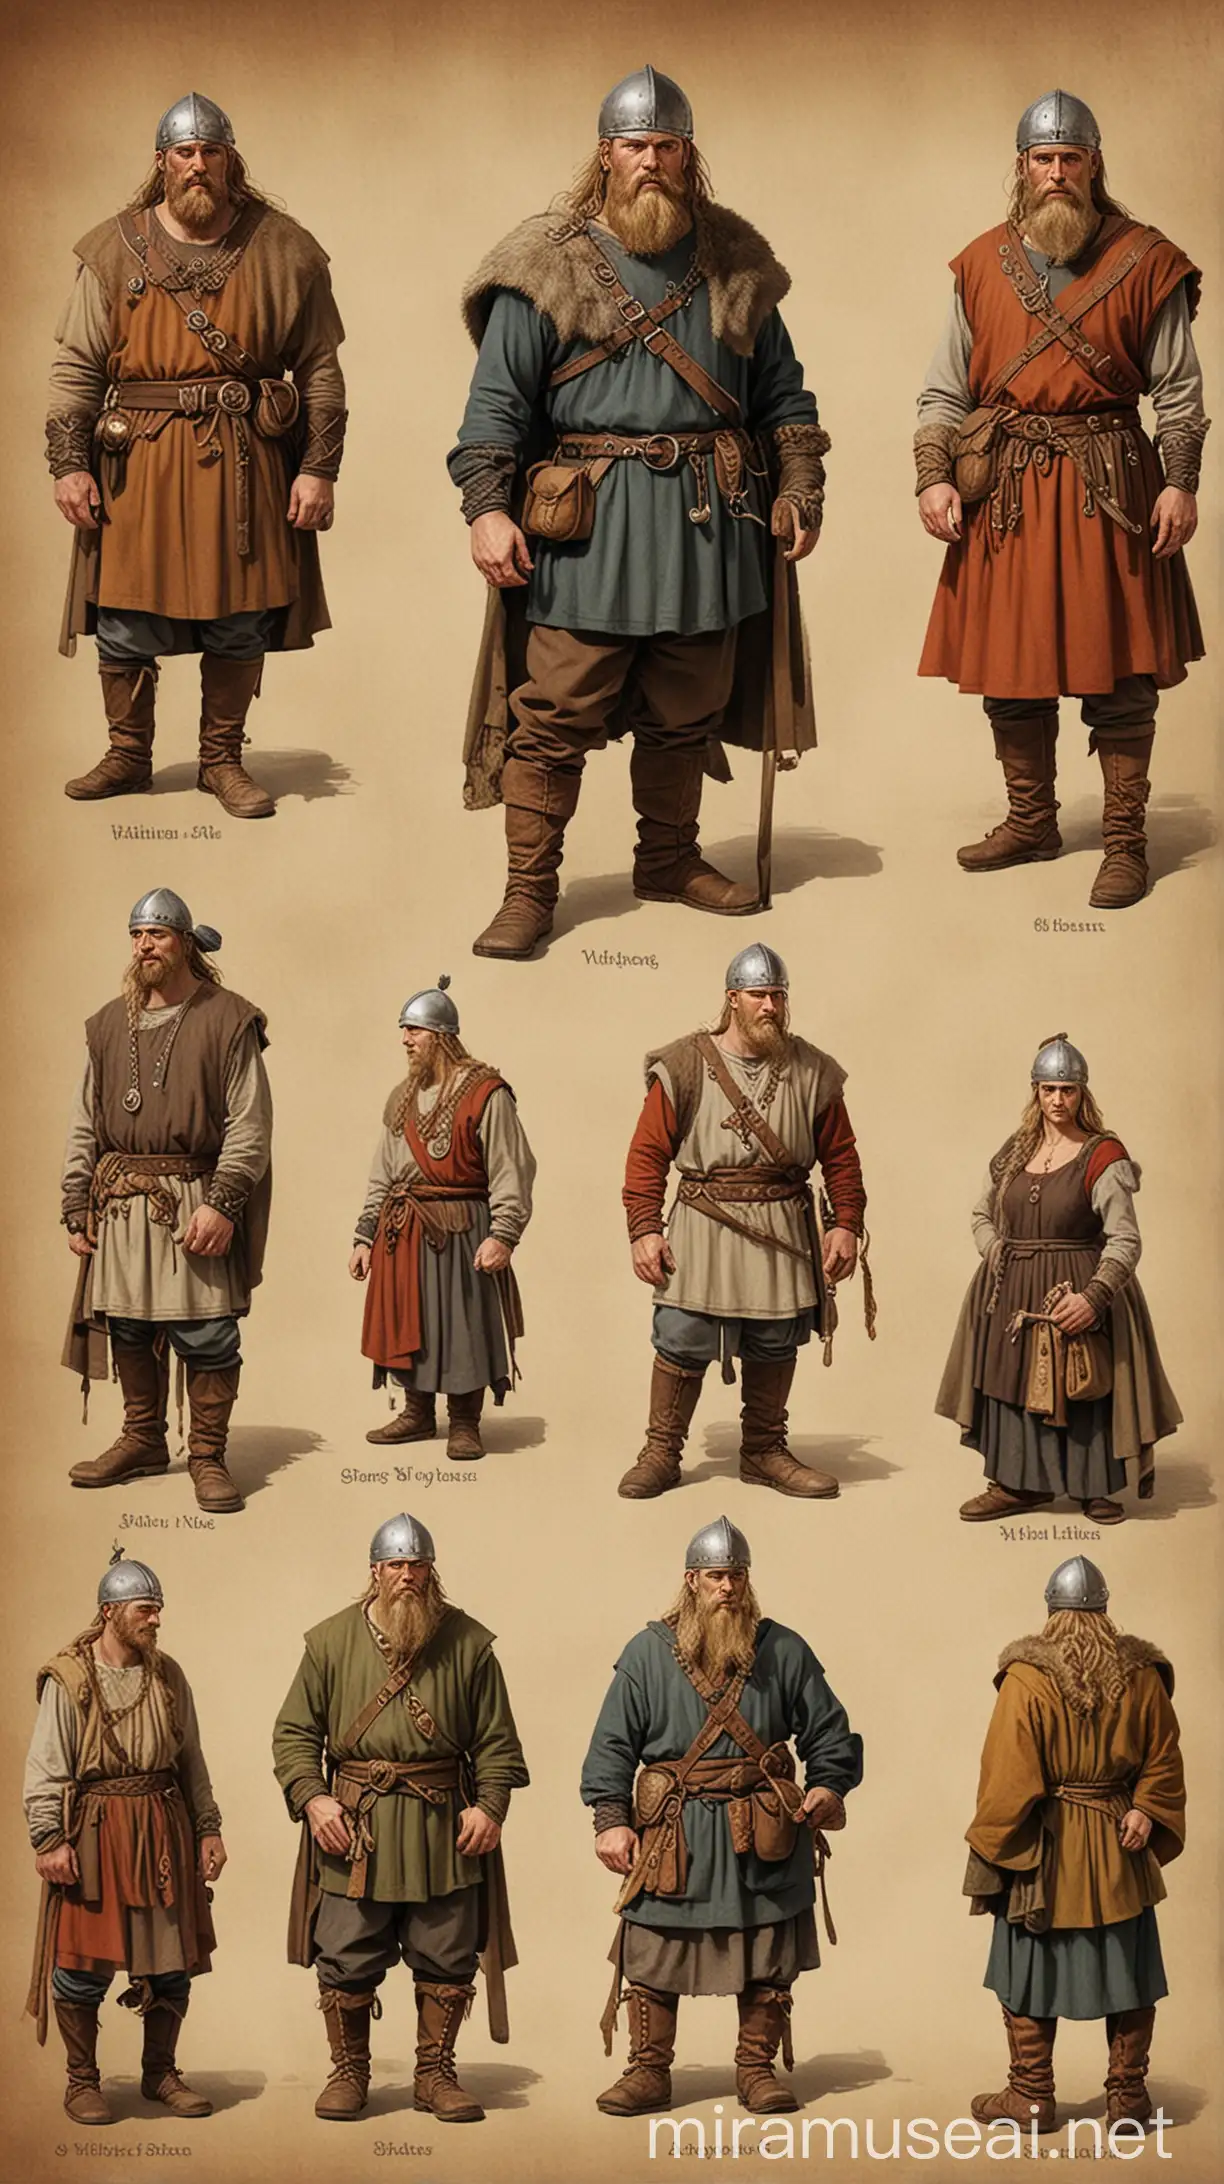 Viking merchant attire: An illustration depicting the attire worn by Viking merchants and their trade goods.